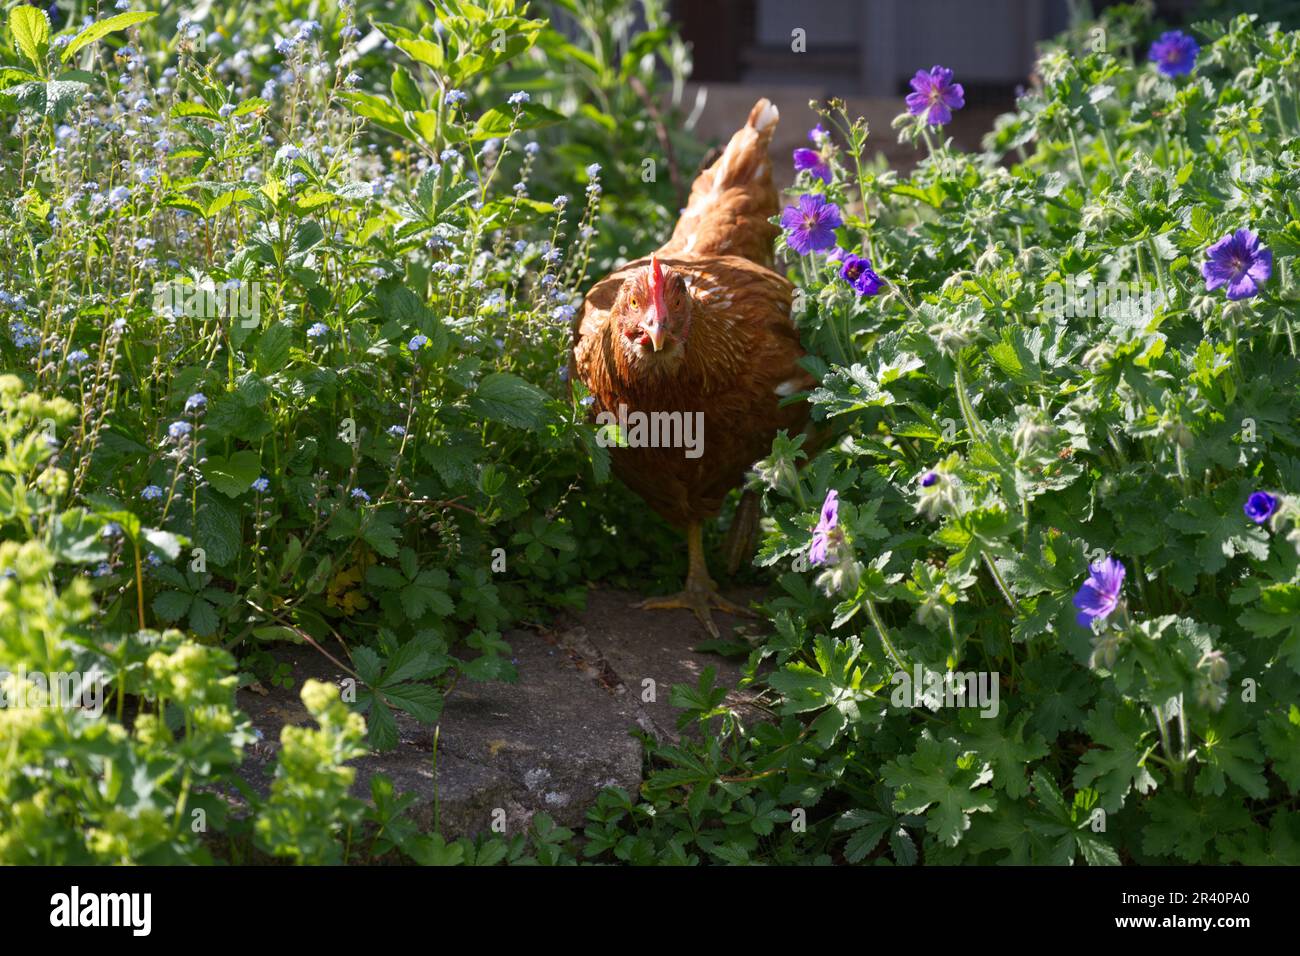 Pet chicken walking through plants in a garden Stock Photo